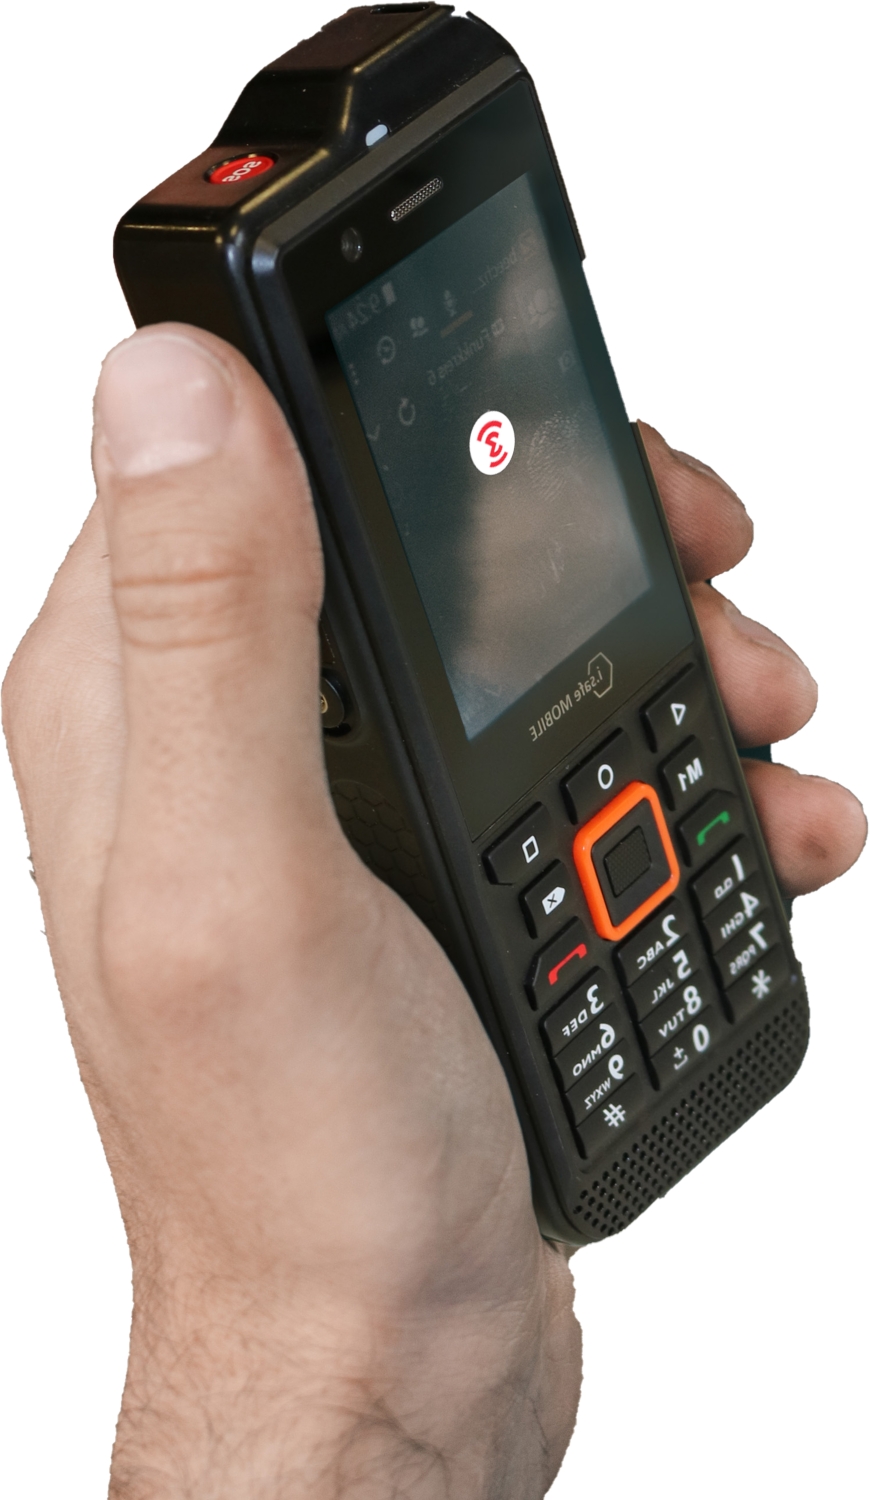 Téléphone PTI Atex 4G GPS IP68 Magneta